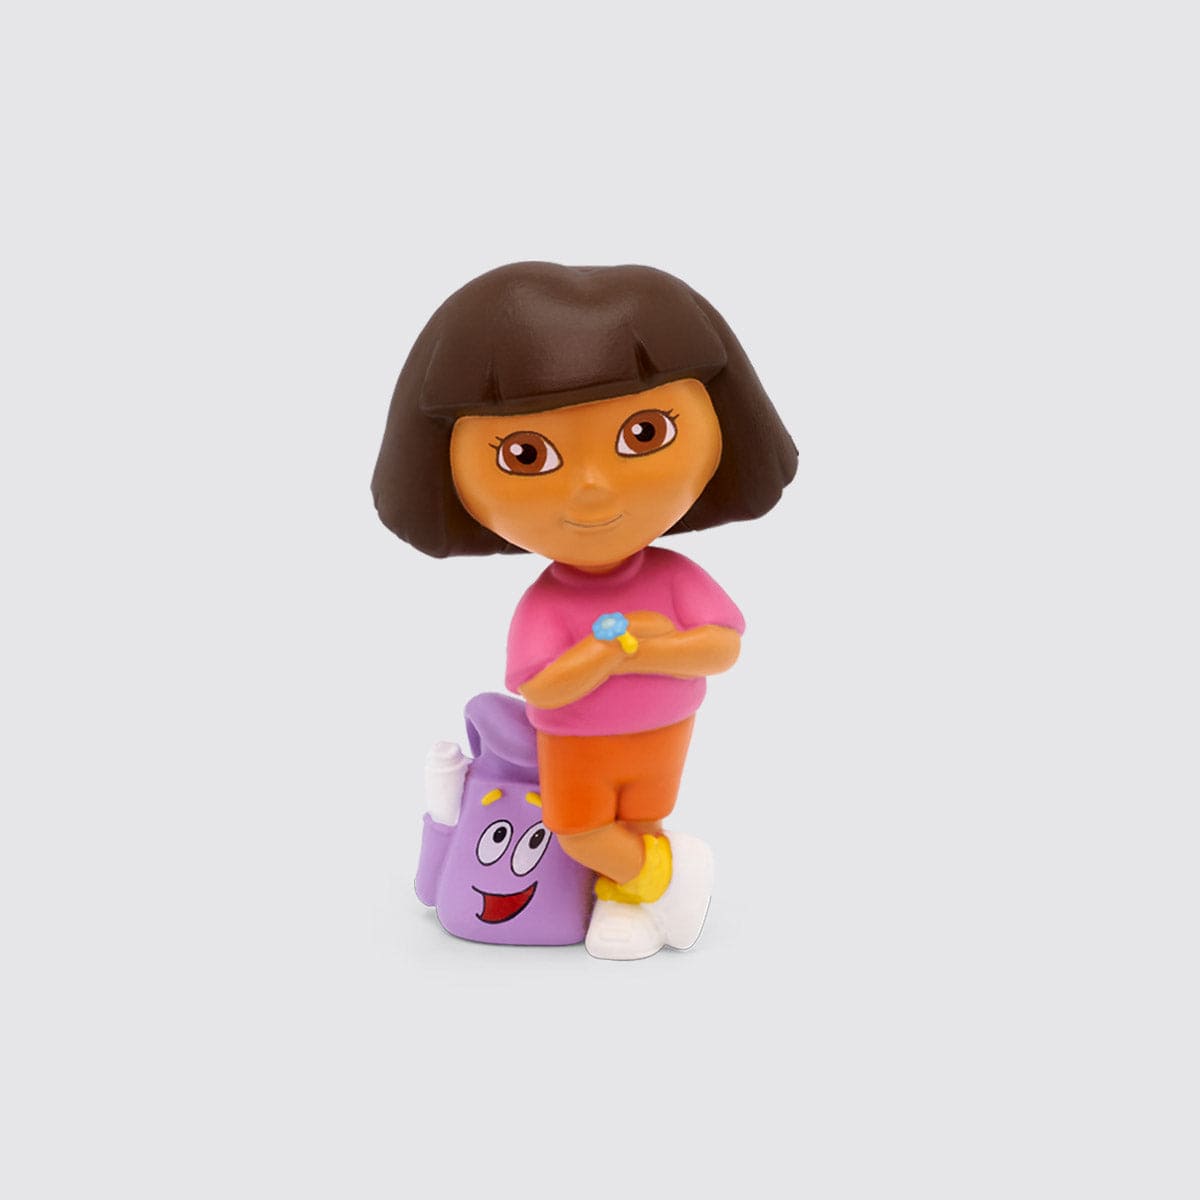 Dora The Explorer - Save the Day! on DVD Movie